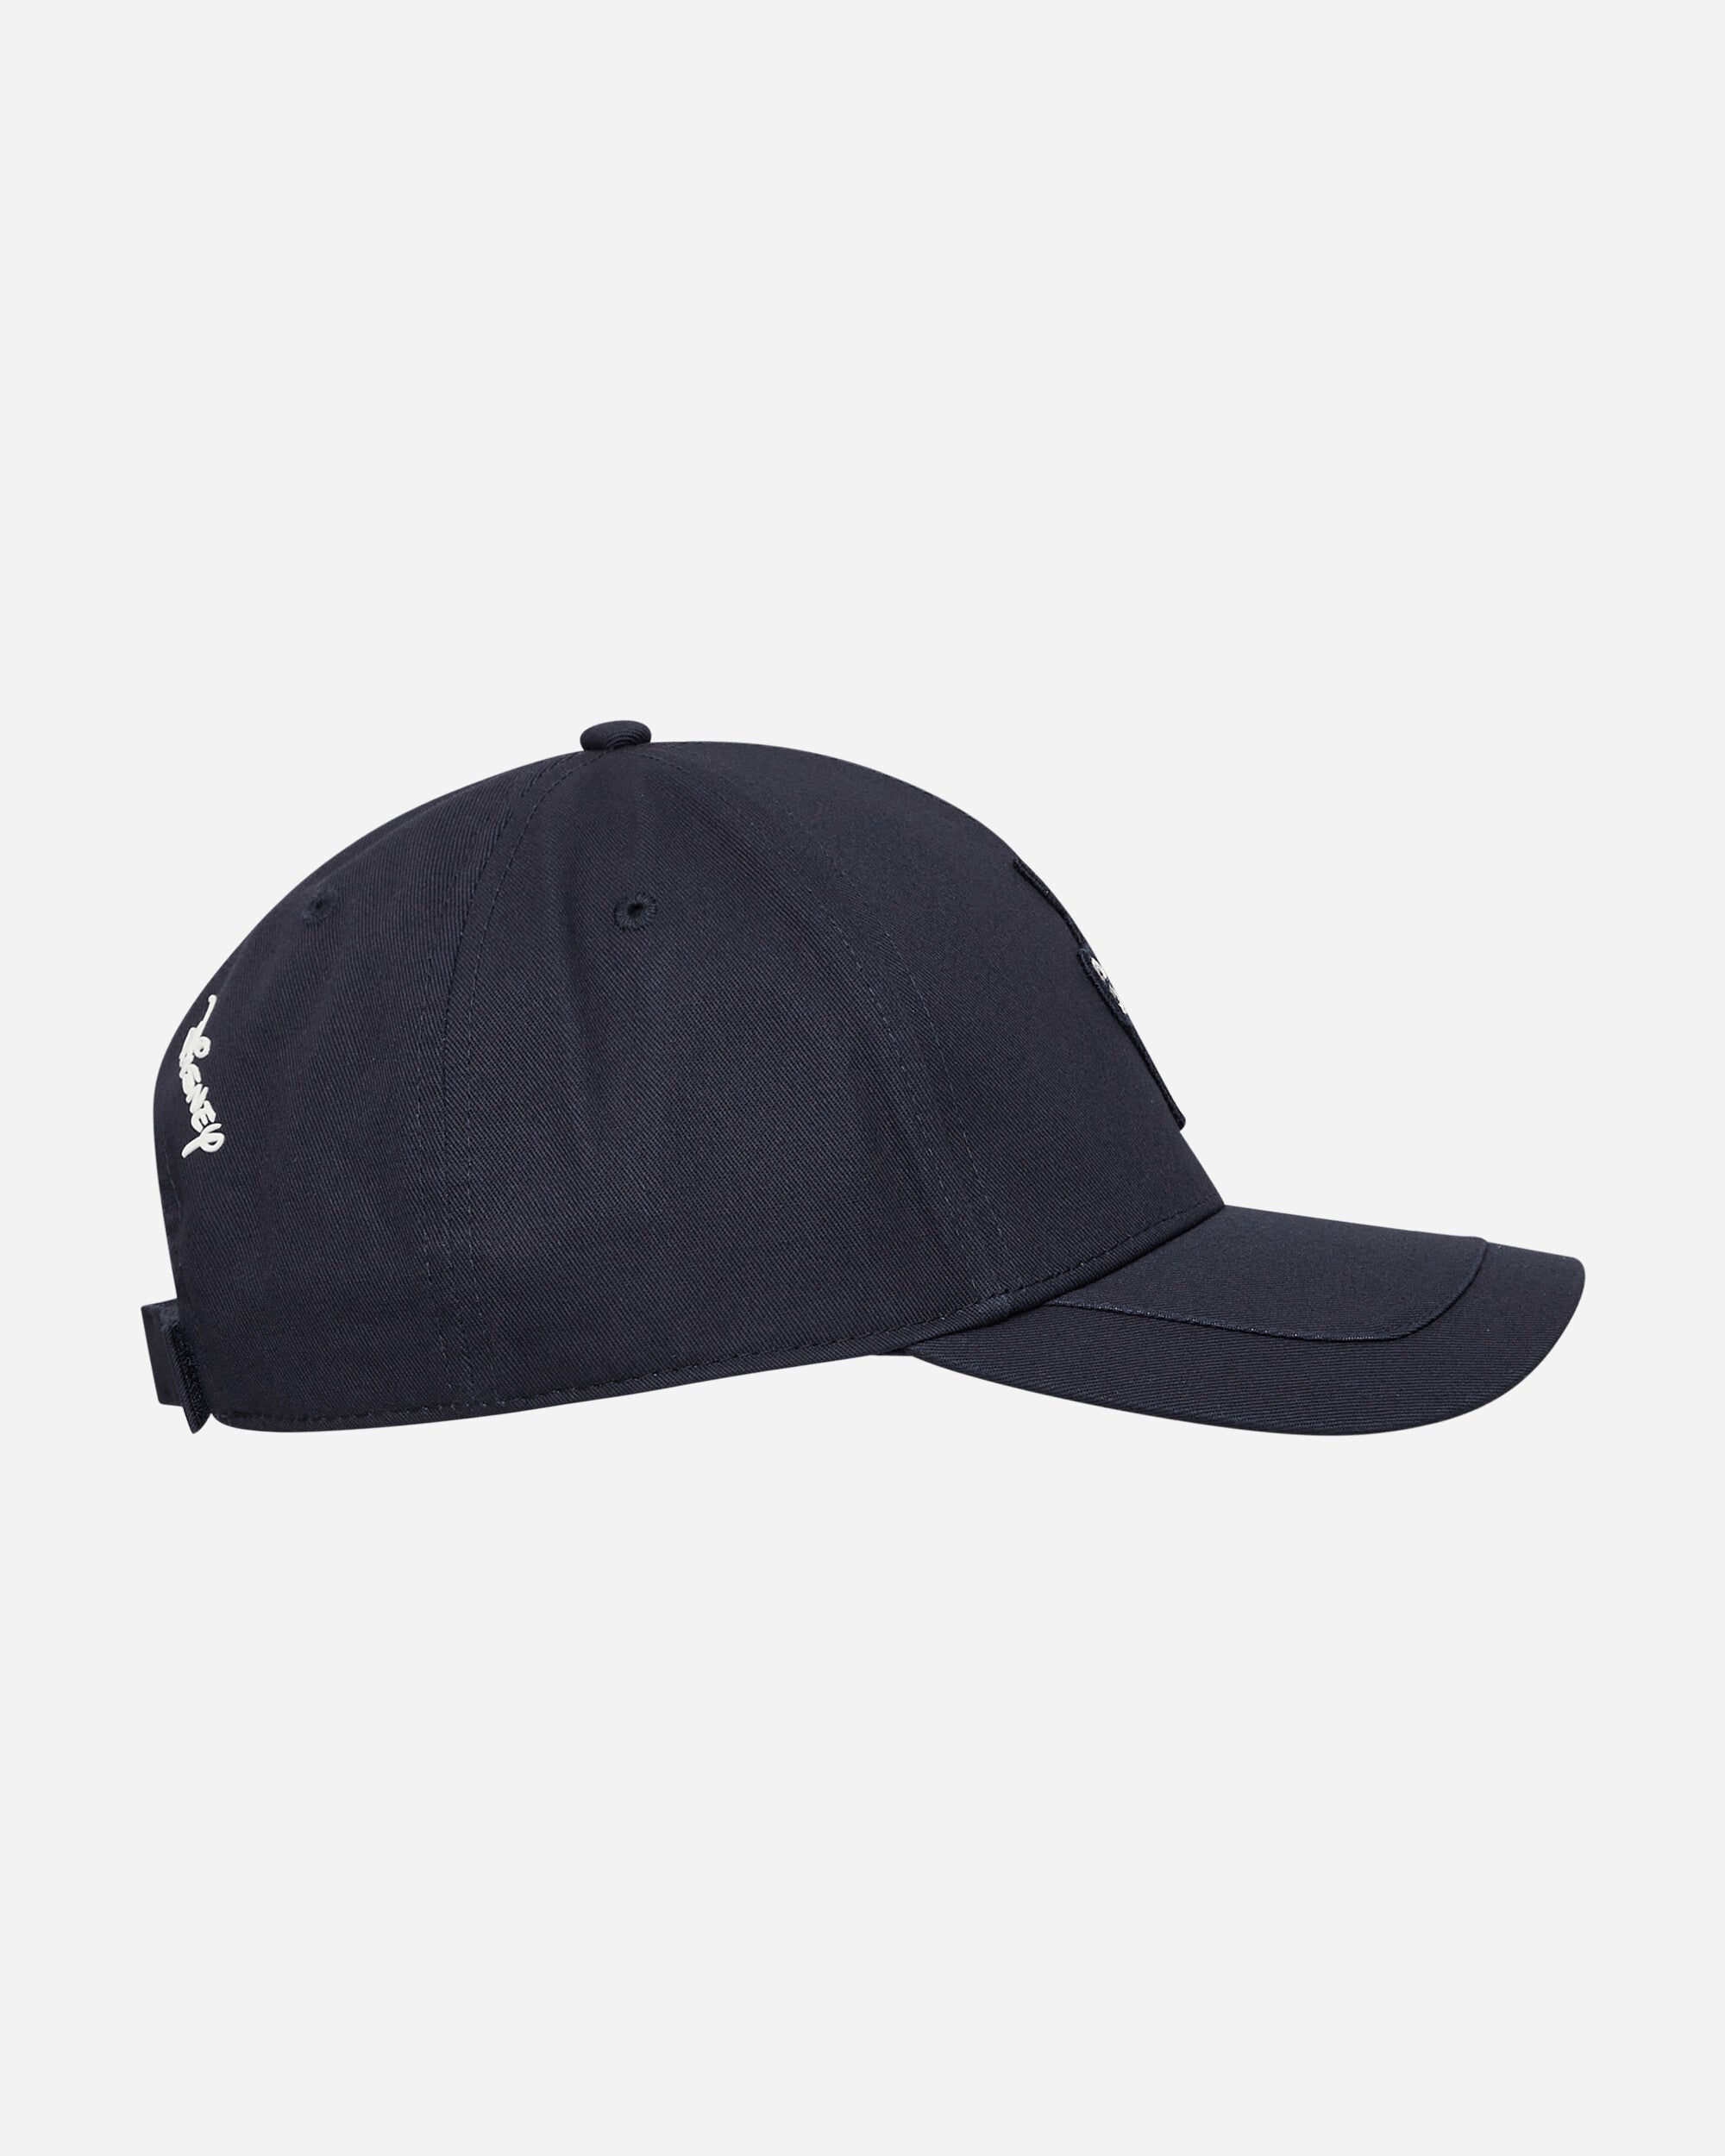 Moncler Baseball Cap Navy Hats Caps 3B000230U082 778